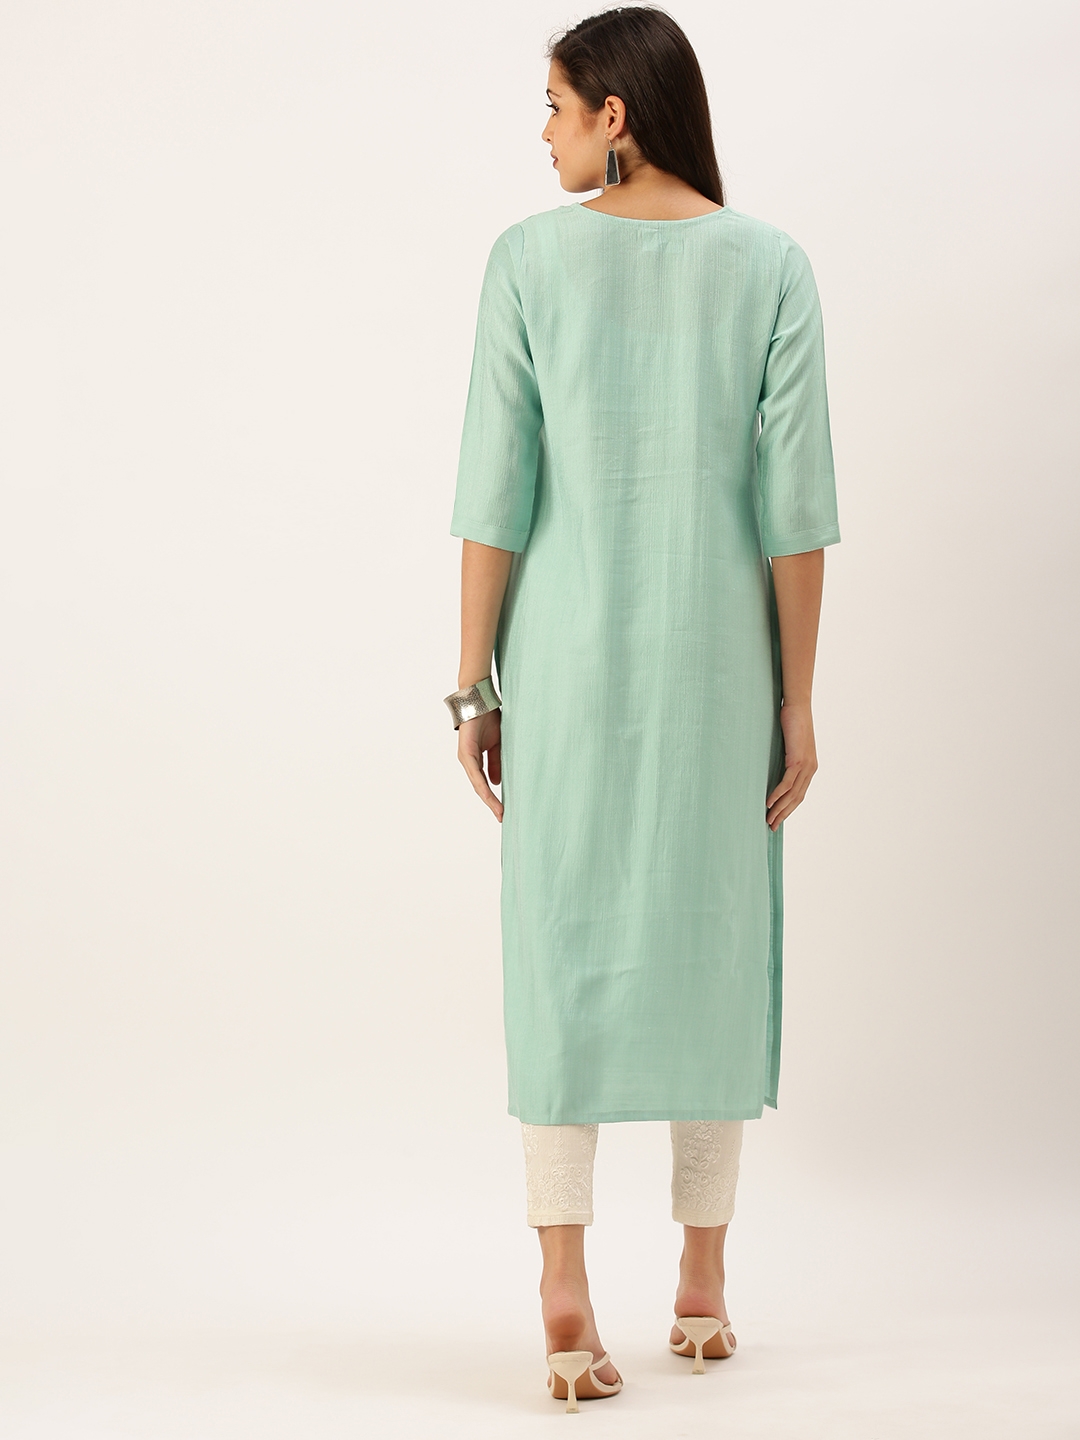 Women's Green Cotton Solid Comfort Fit Kurtas